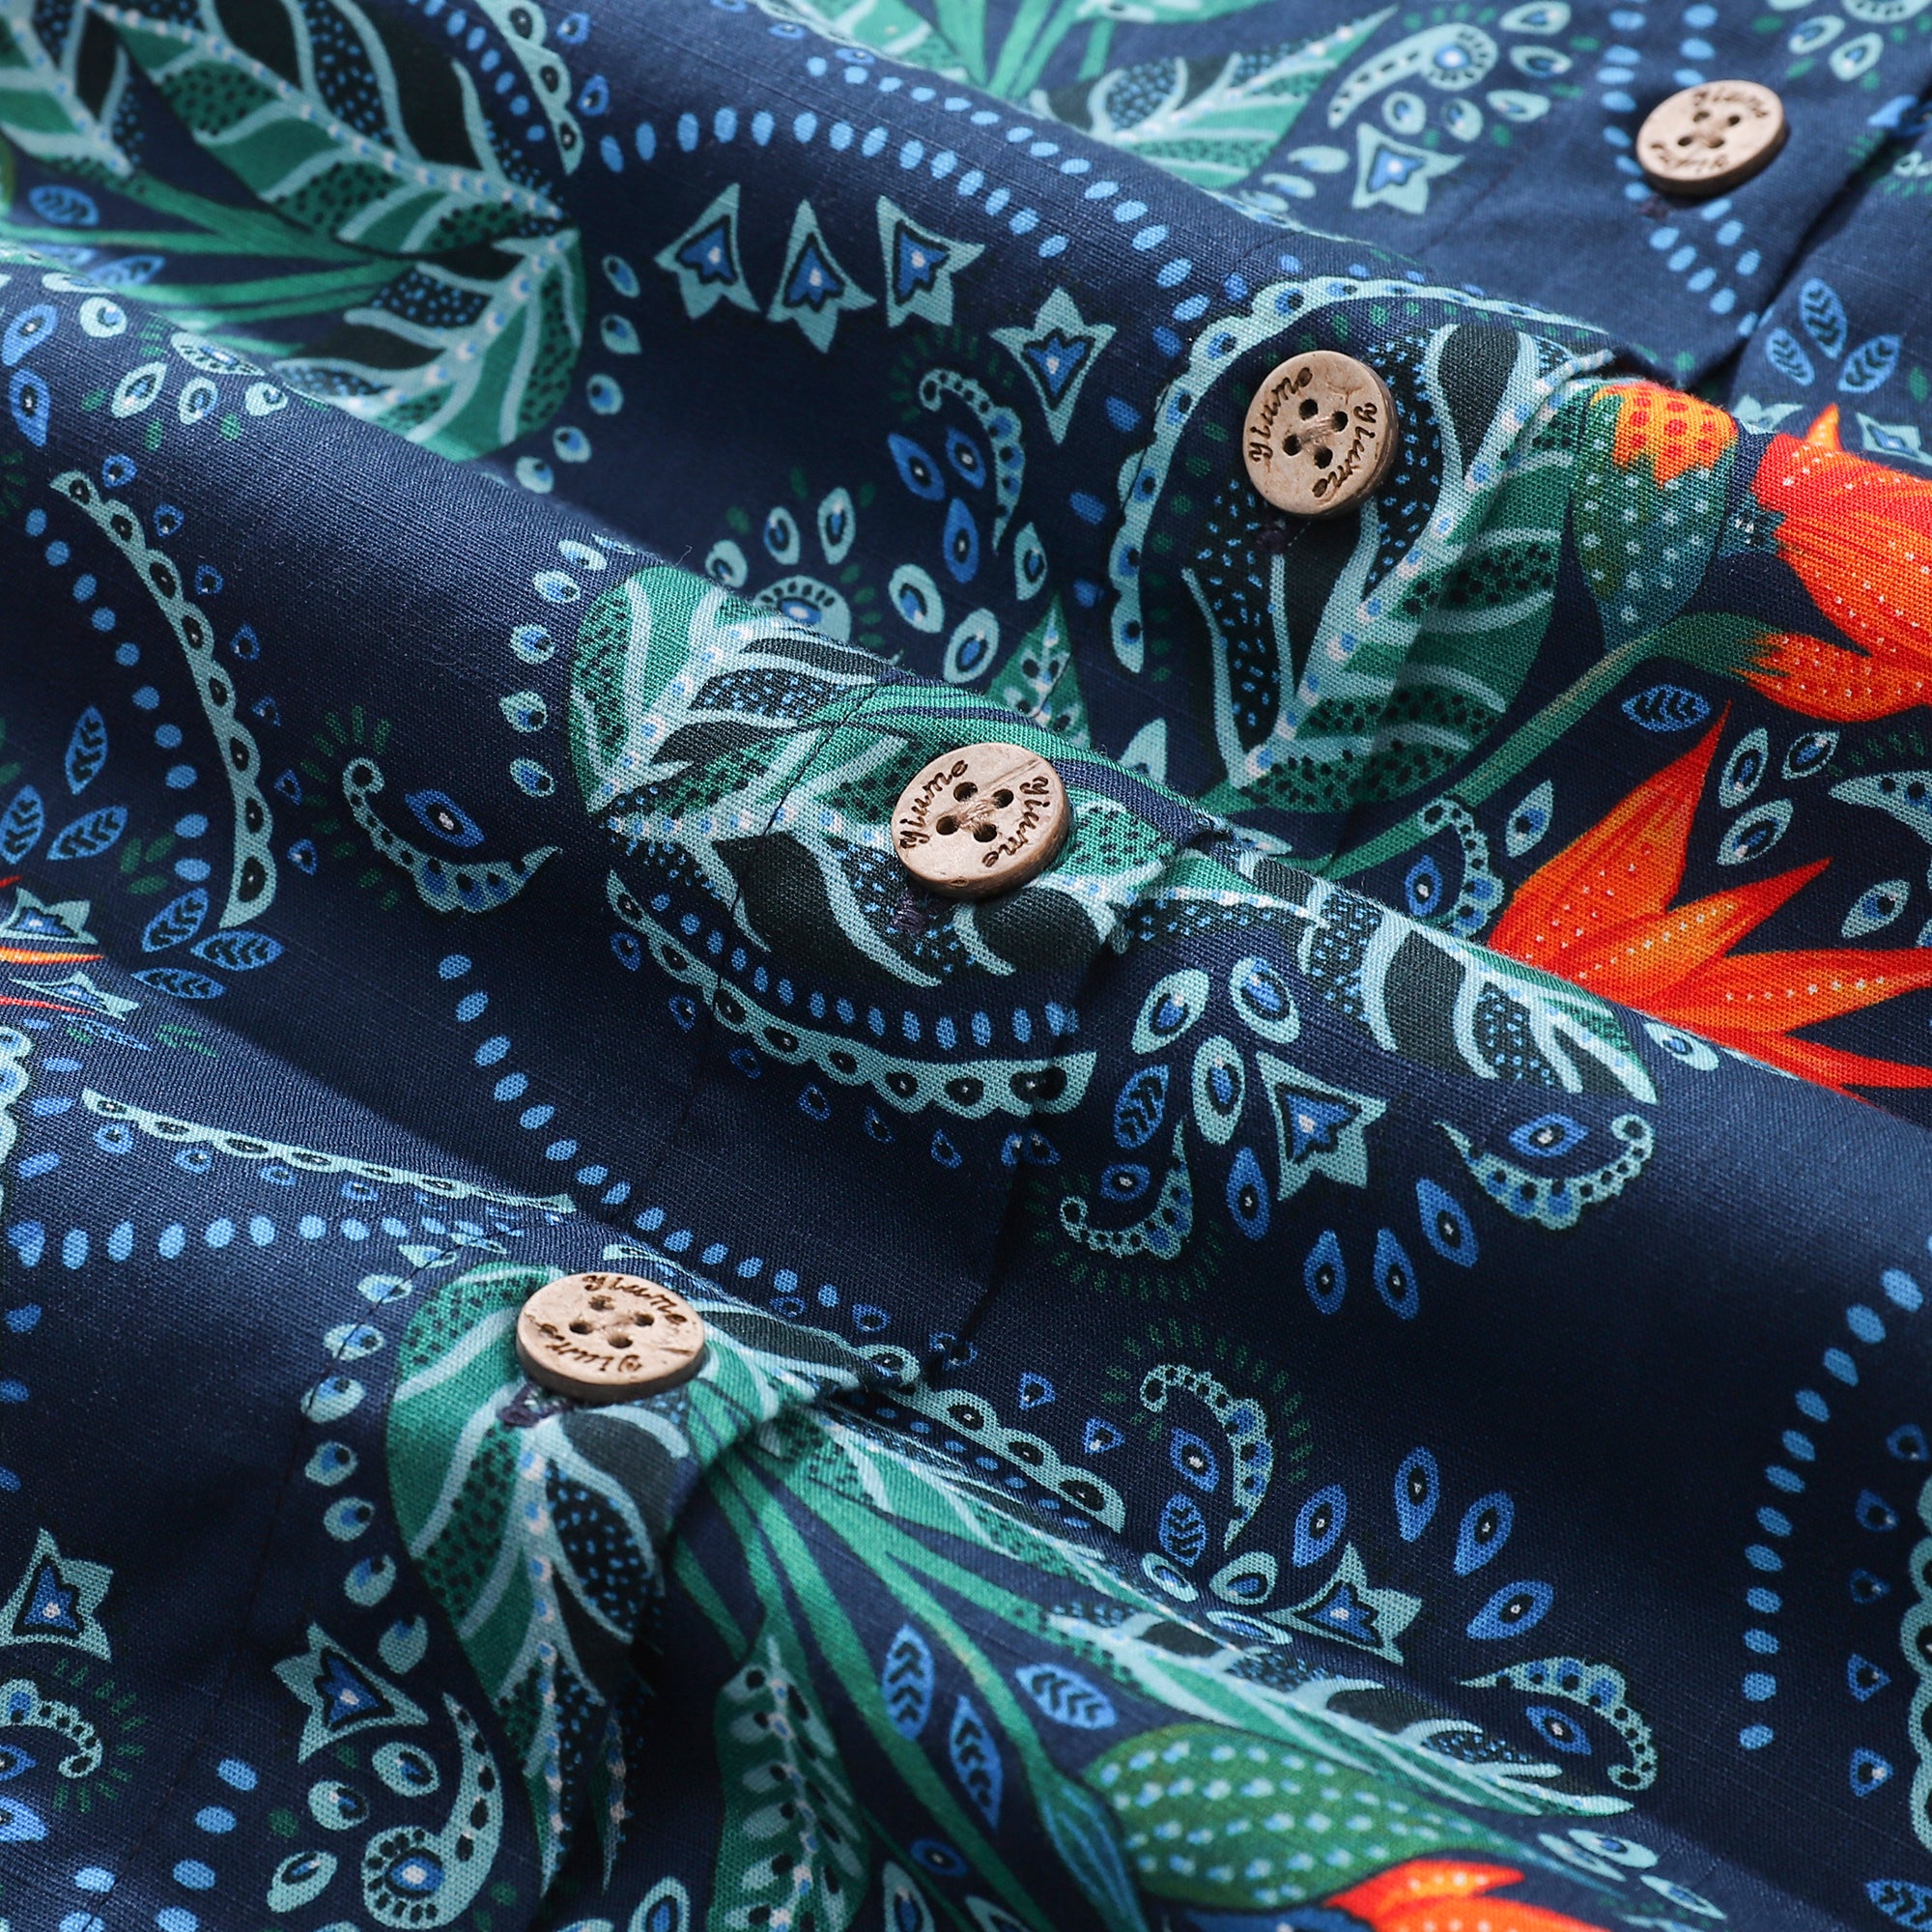 Women's Hawaiian Shirt Birds of Paradise By Fizah Malik Print Cotton Button-up Short Sleeve